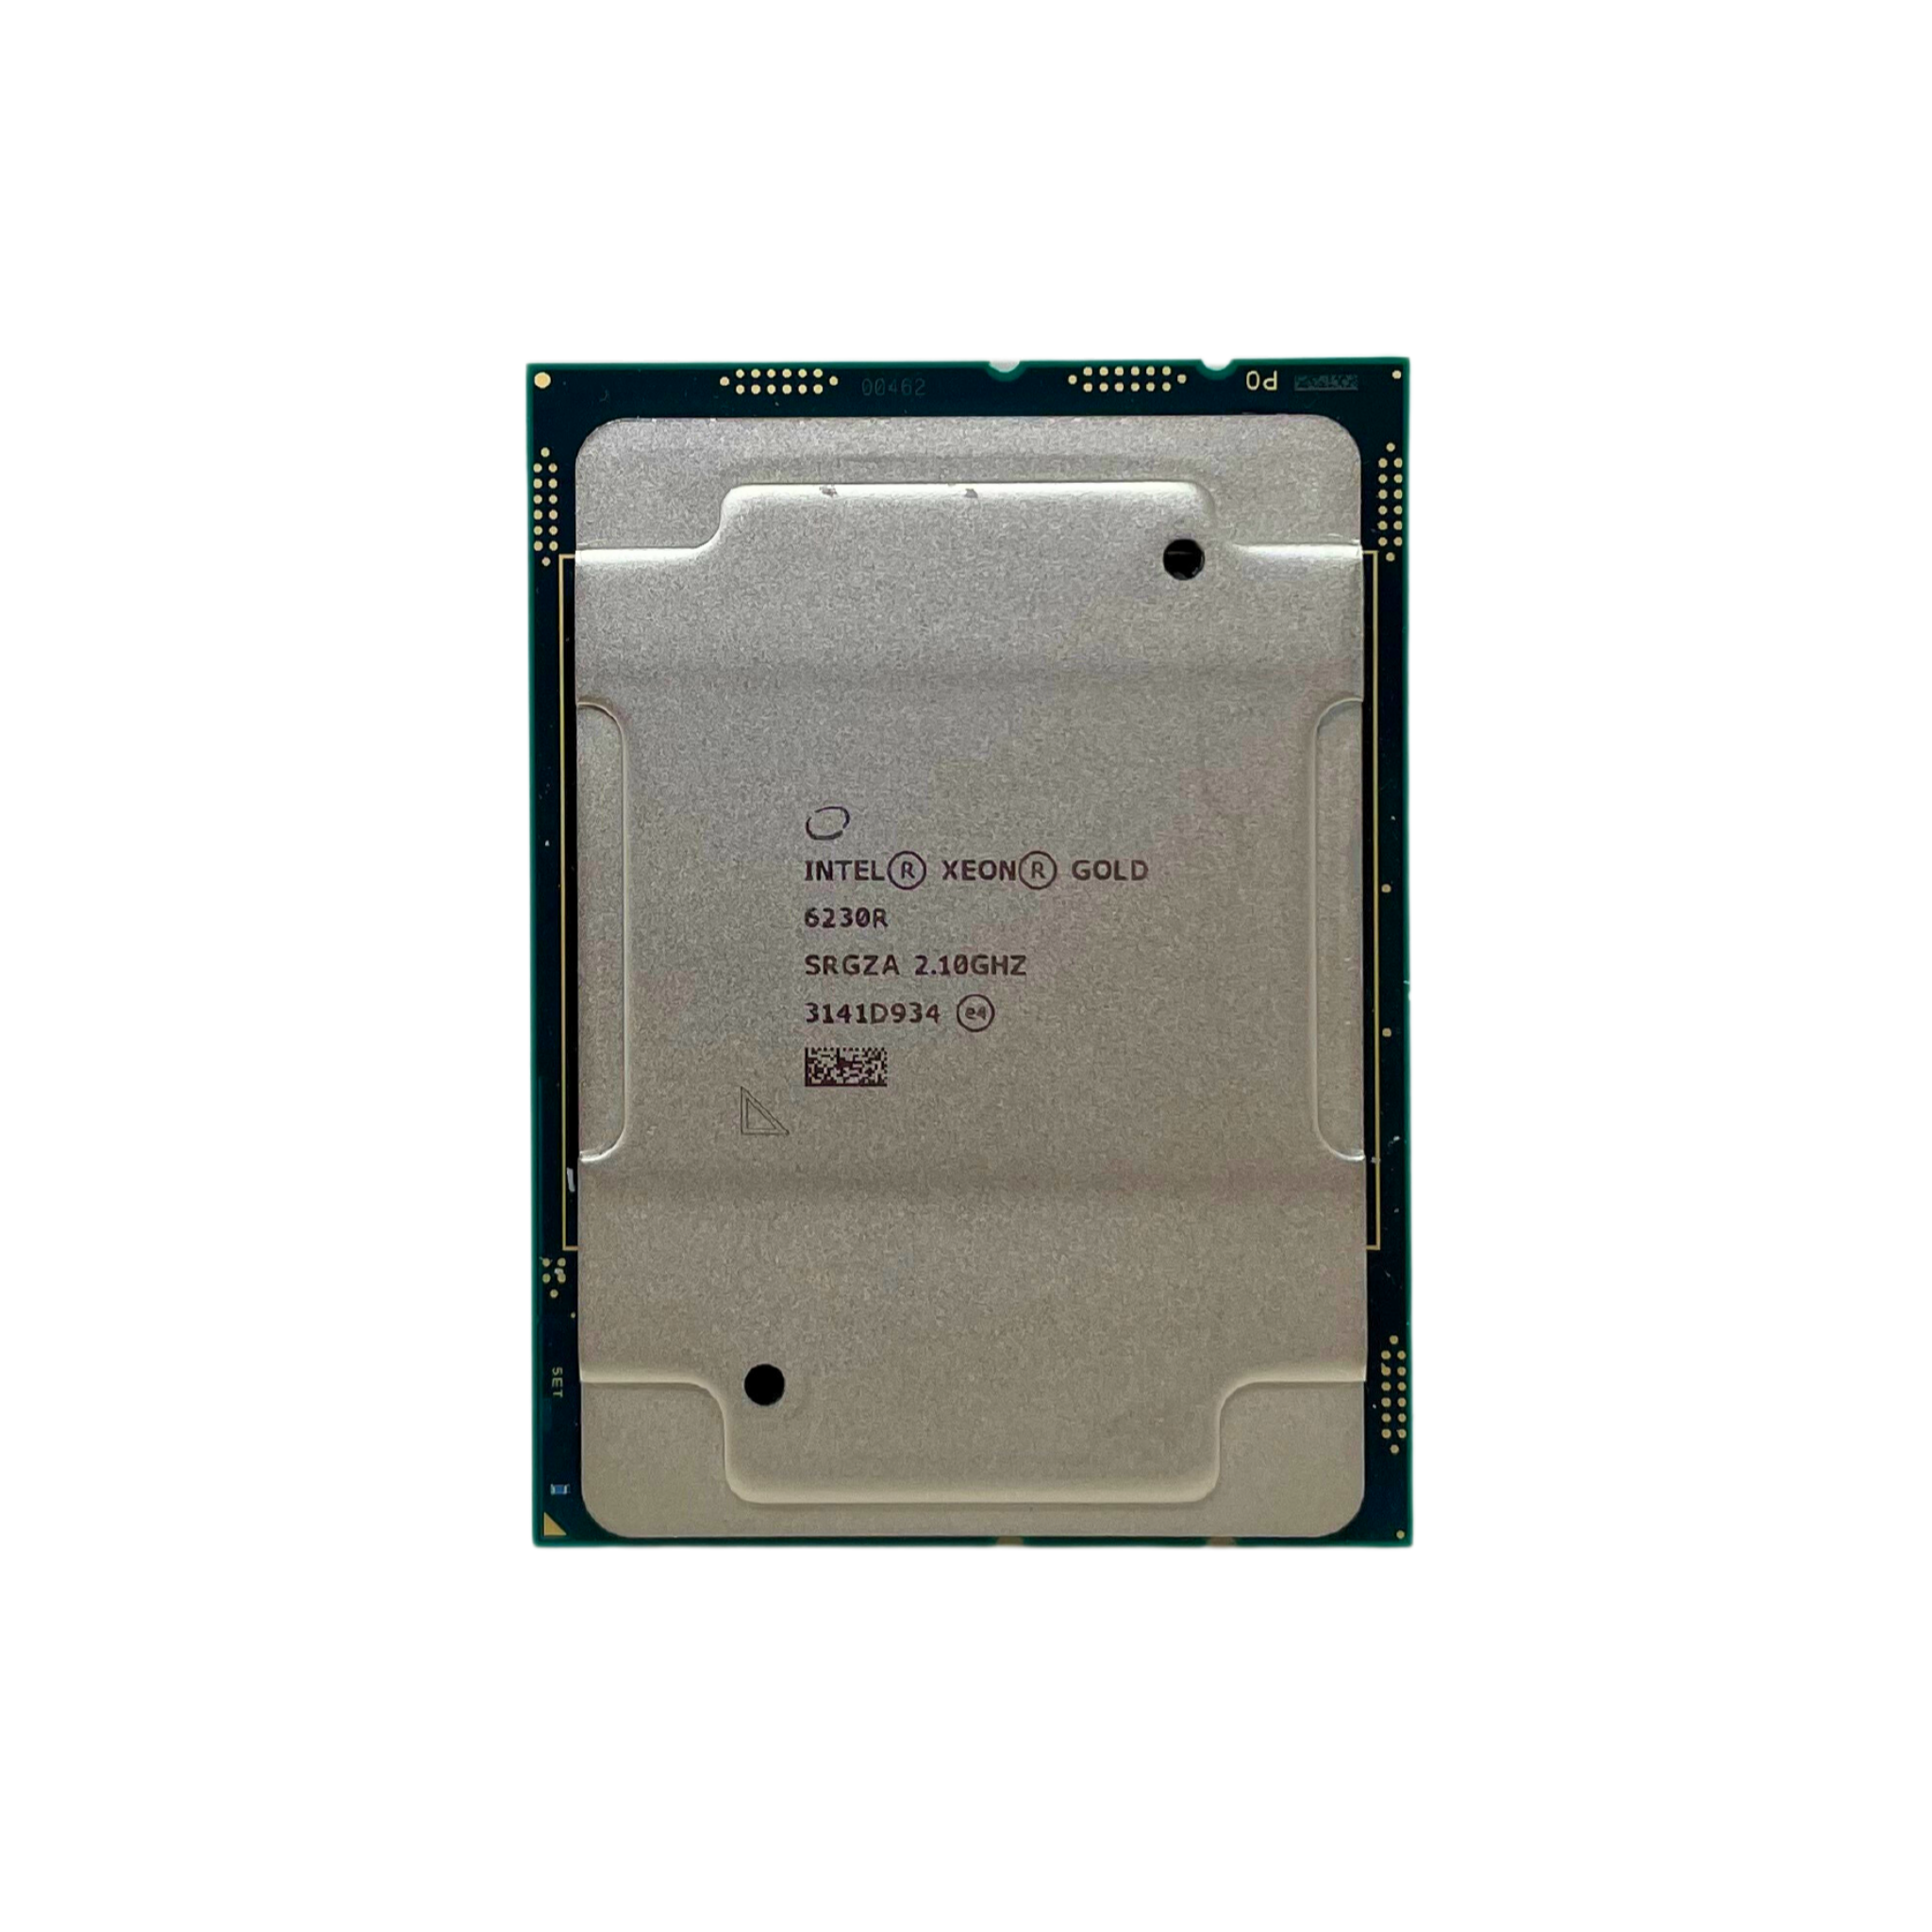 Intel Xeon Gold 6230R 2.1GHz 35.7MB L3 16 Core FCLGA3647 CPU PROCESSOR